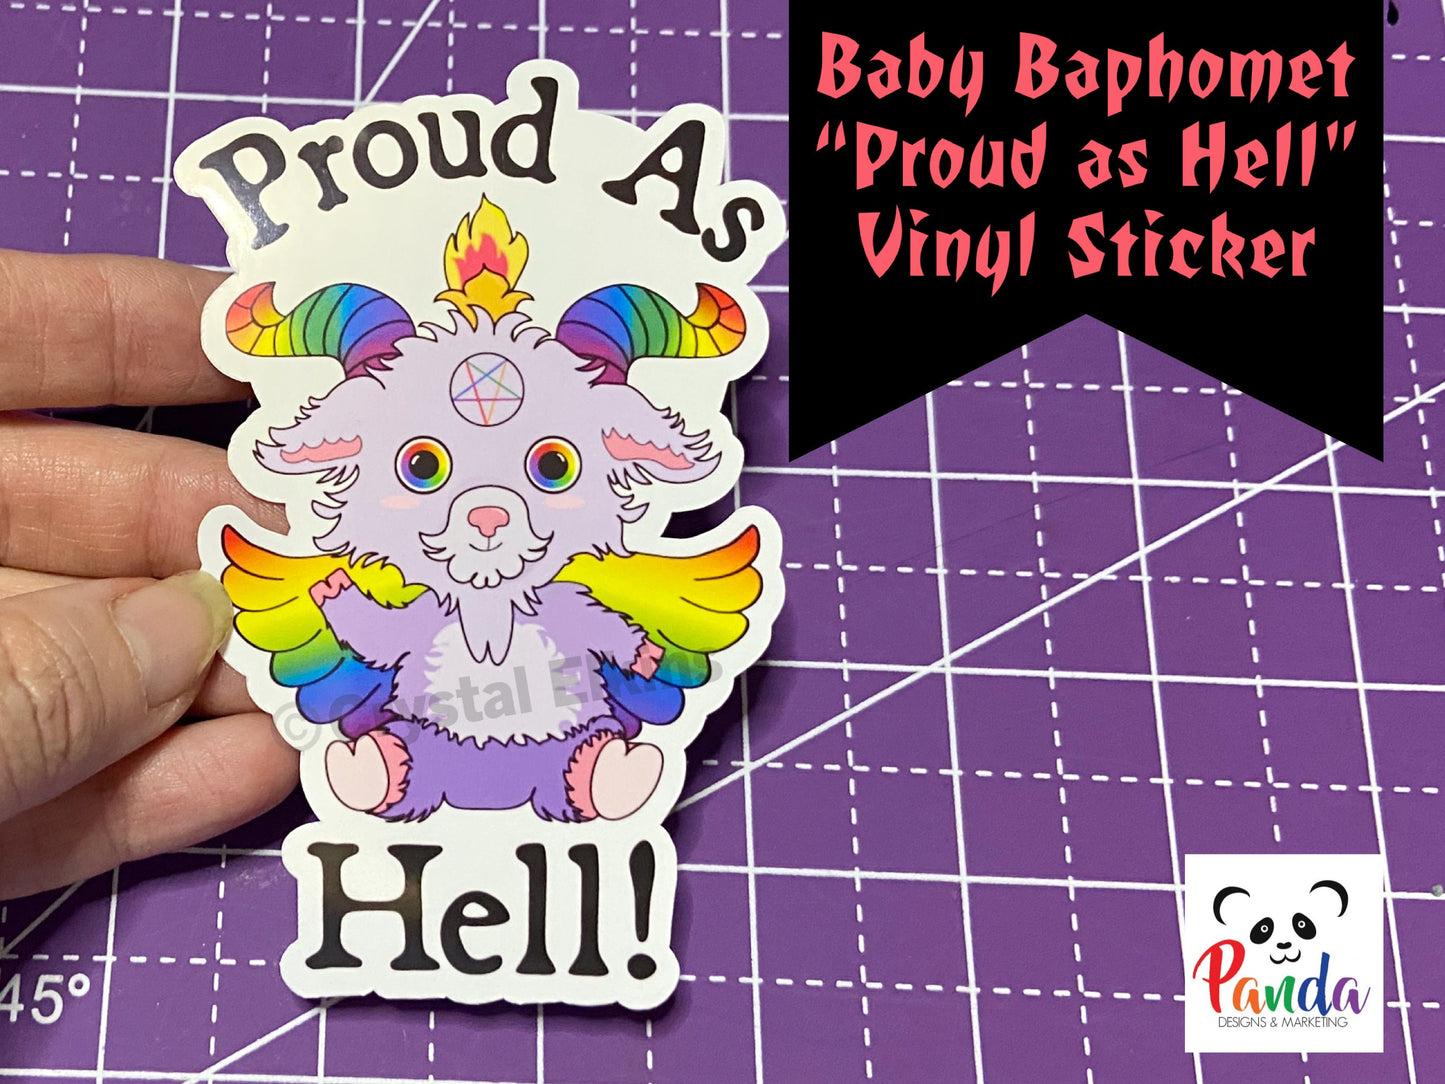 Baby Baphomet Proud as Hell Vinyl Sticker